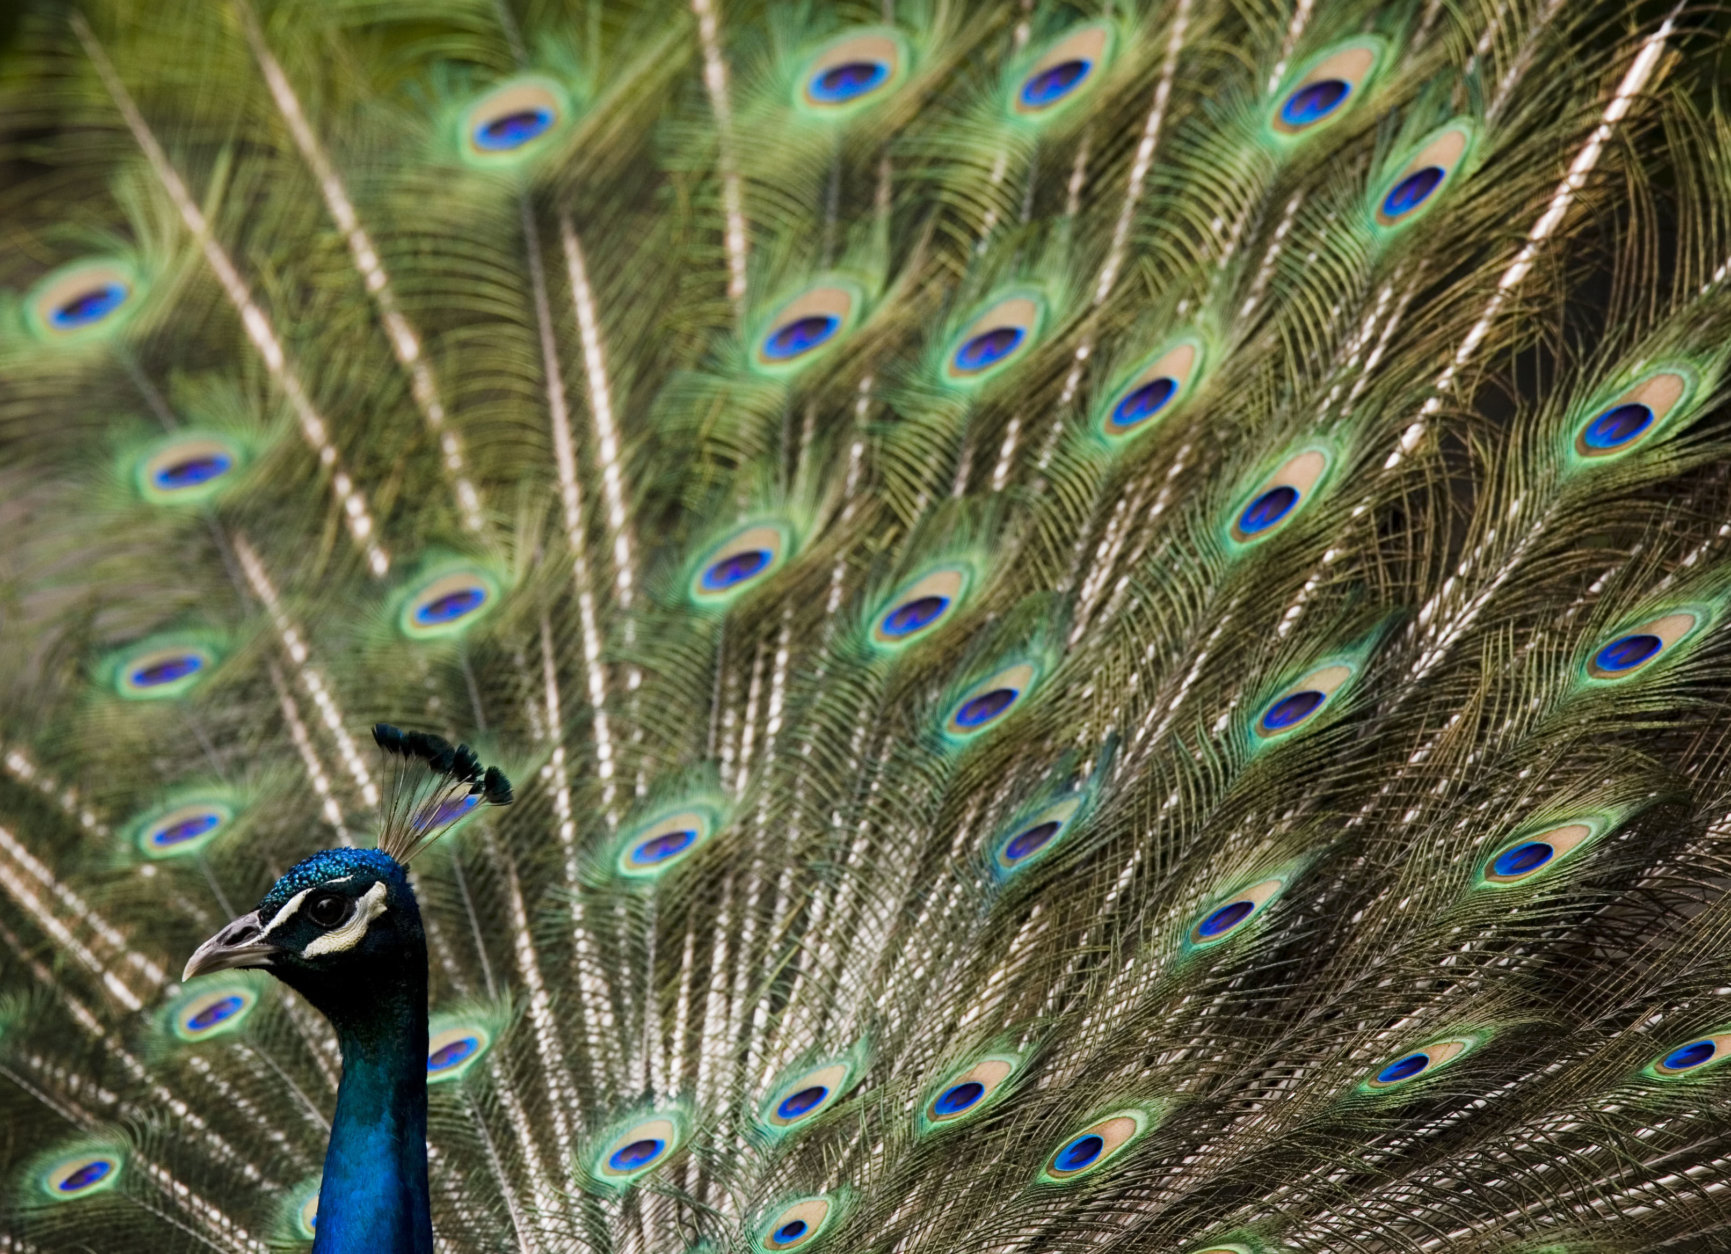 A peacock displays its feathers at the Philadelphia Zoo in Philadelphia, Thursday, June 5, 2008.  (AP Photo/Matt Rourke)